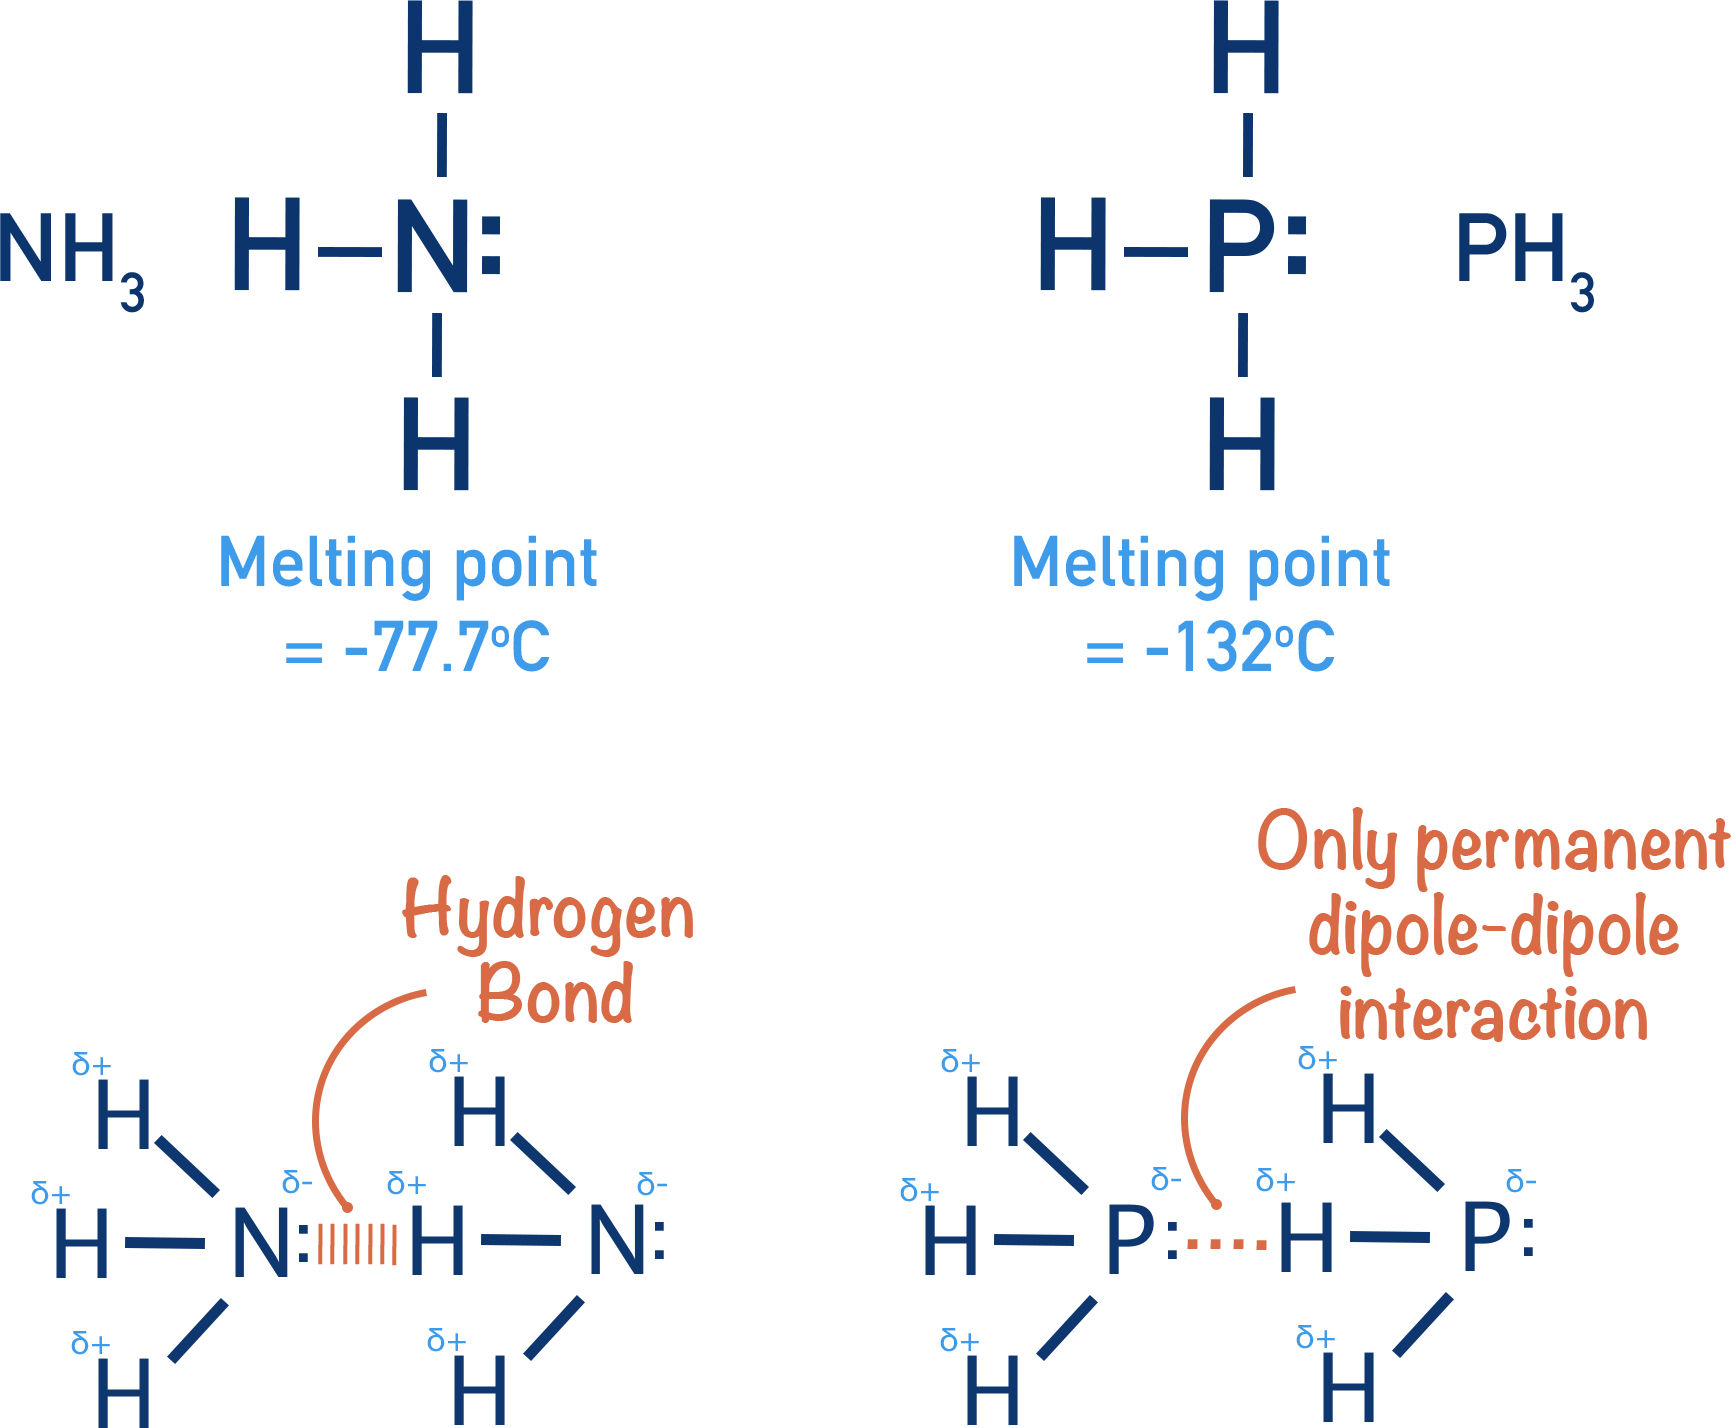 melting point ammonia phosphine hydrogen bonding permanent dipole